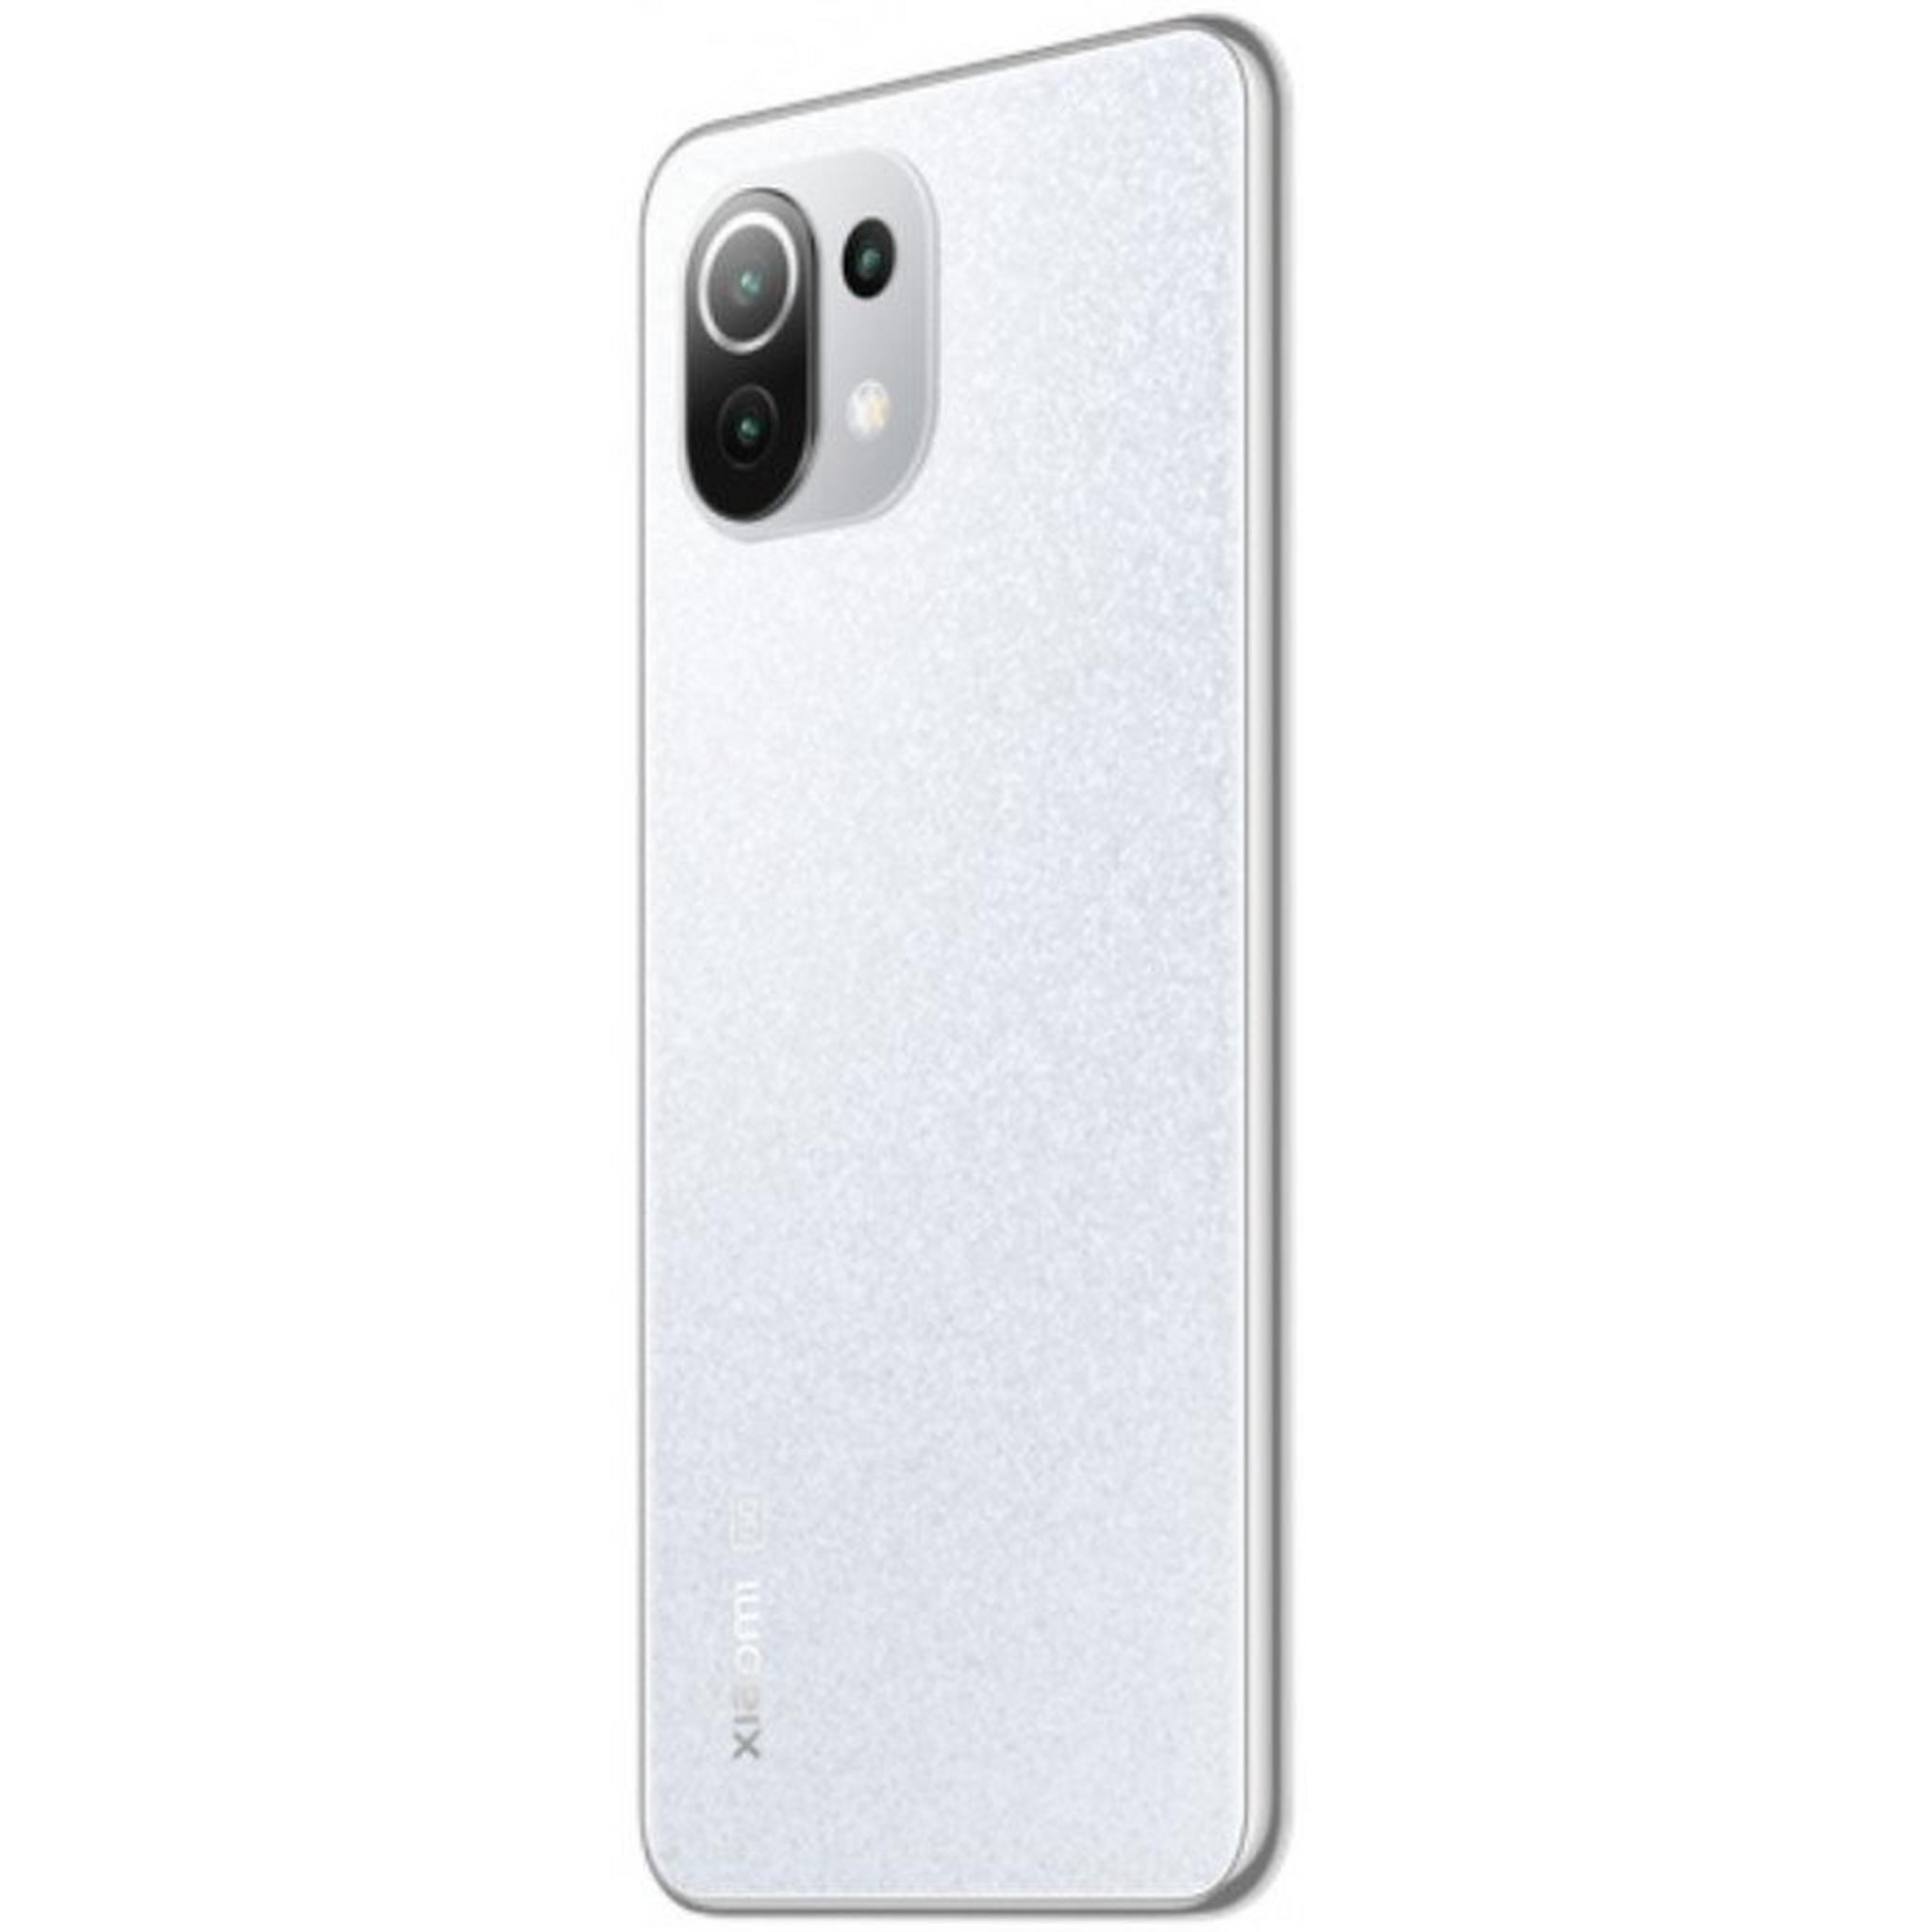 Xiaomi 11 Lite NE 256GB 5G Phone - White